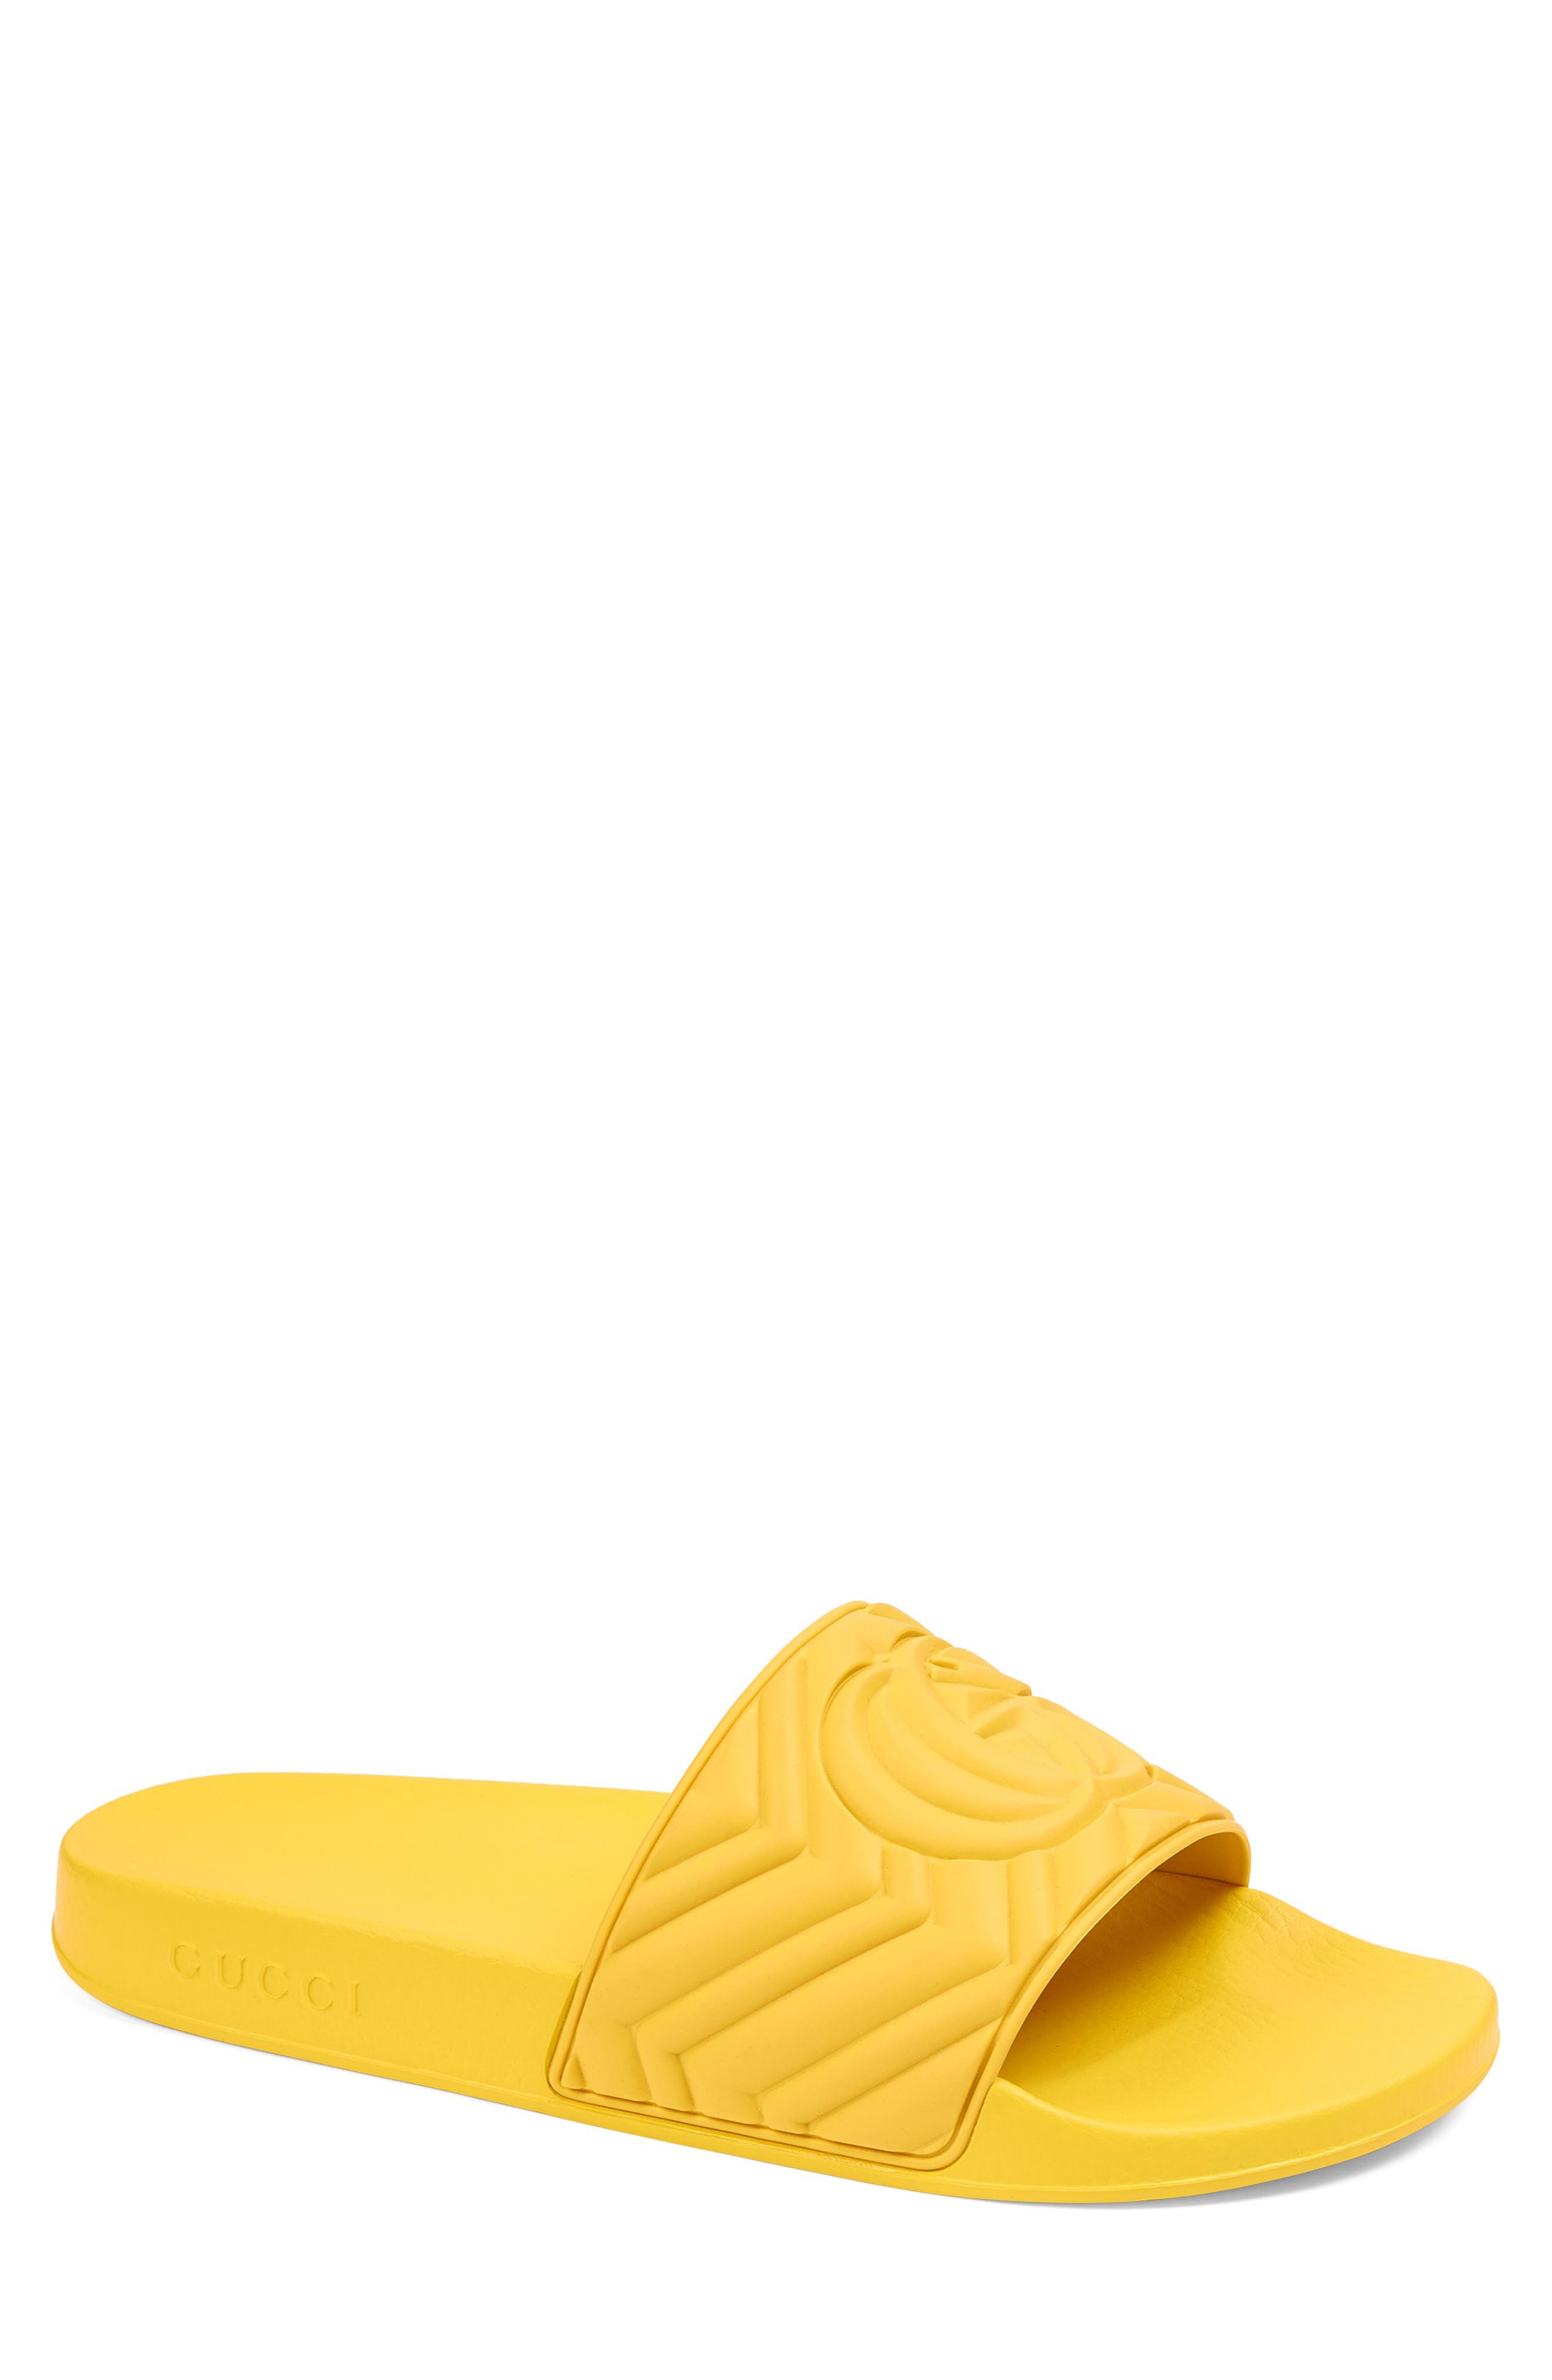 yellow gucci flip flops - Entrega gratis -